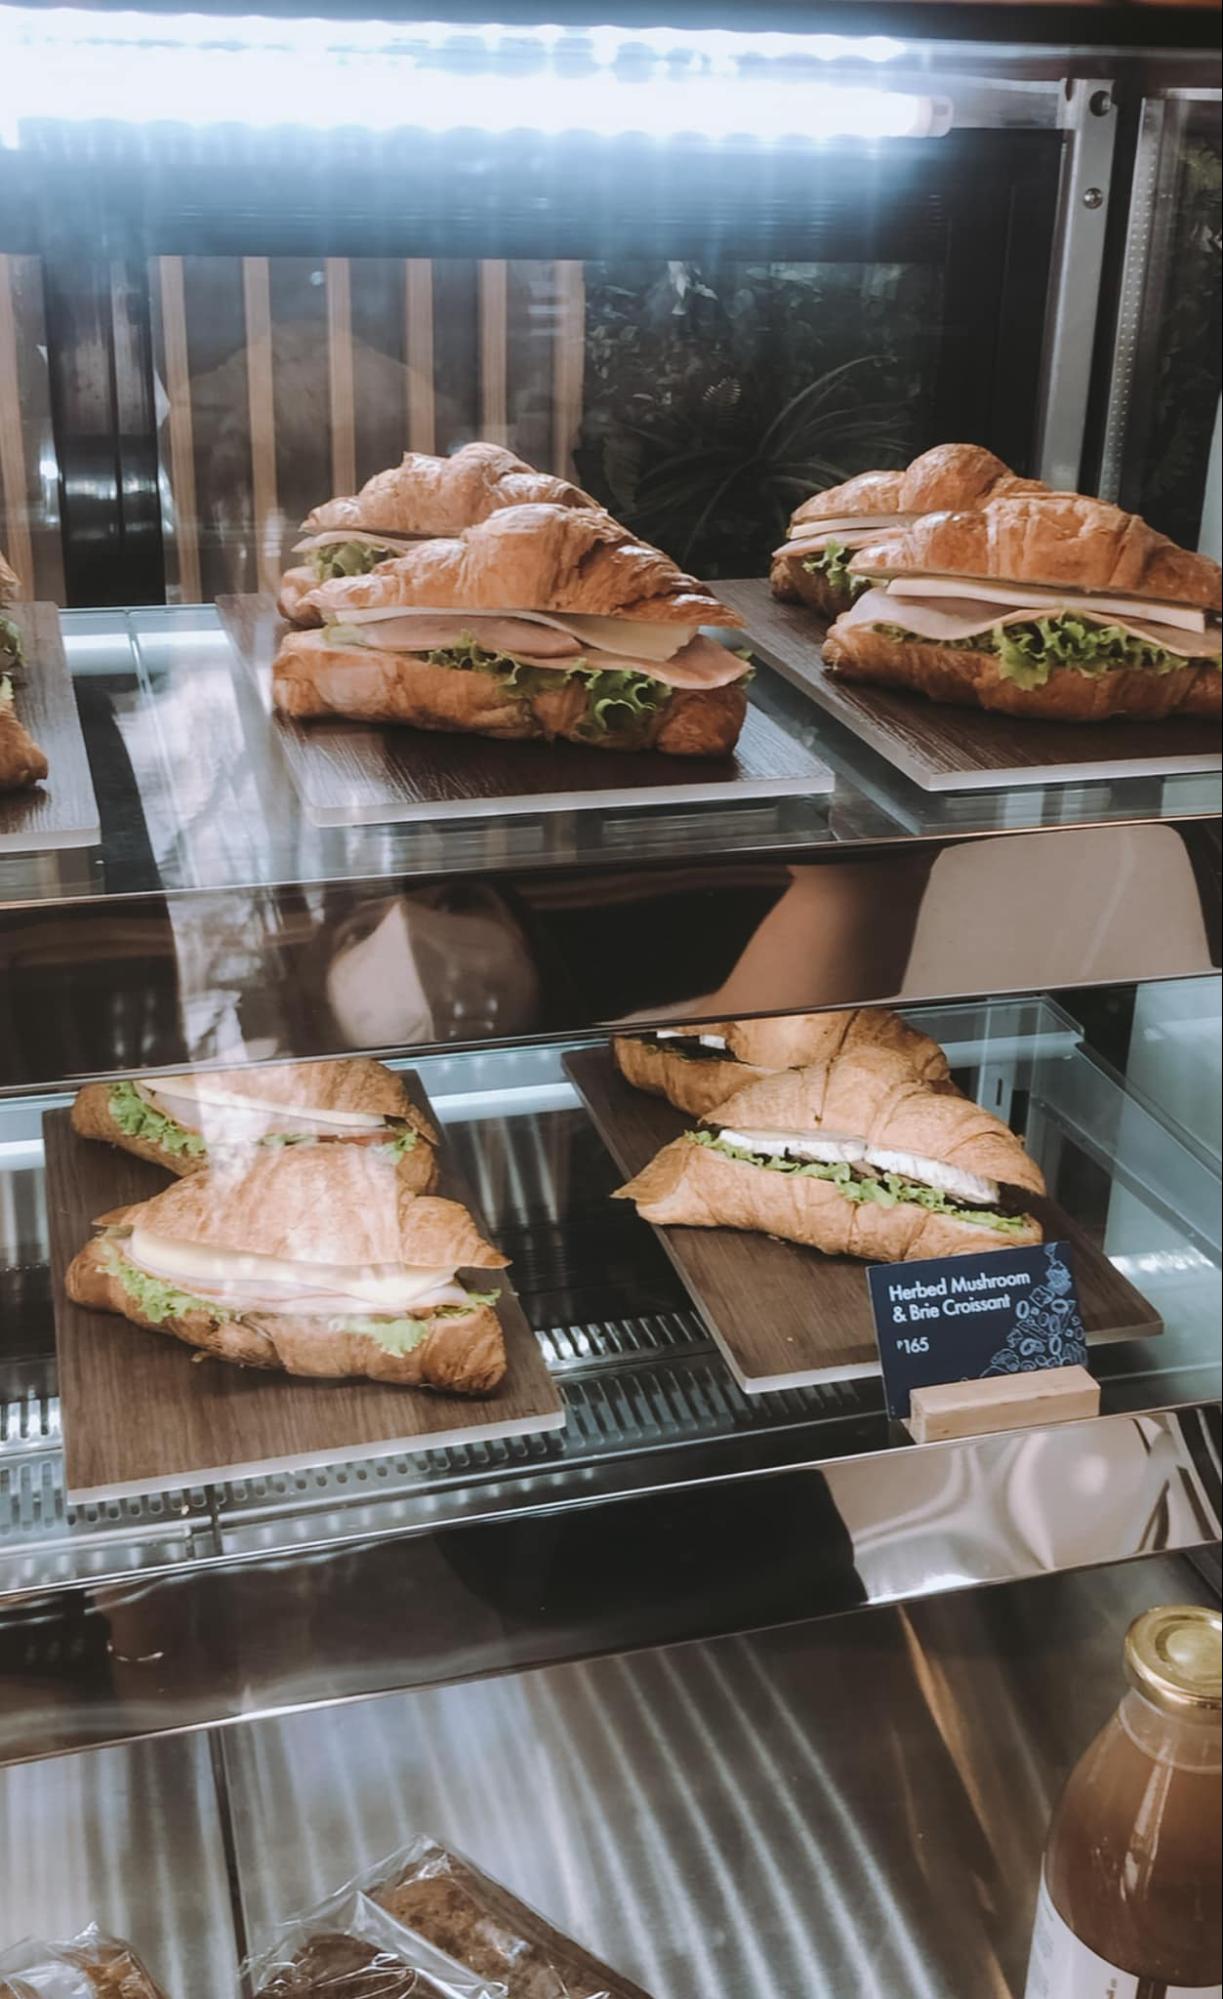 deli sandwiches on display